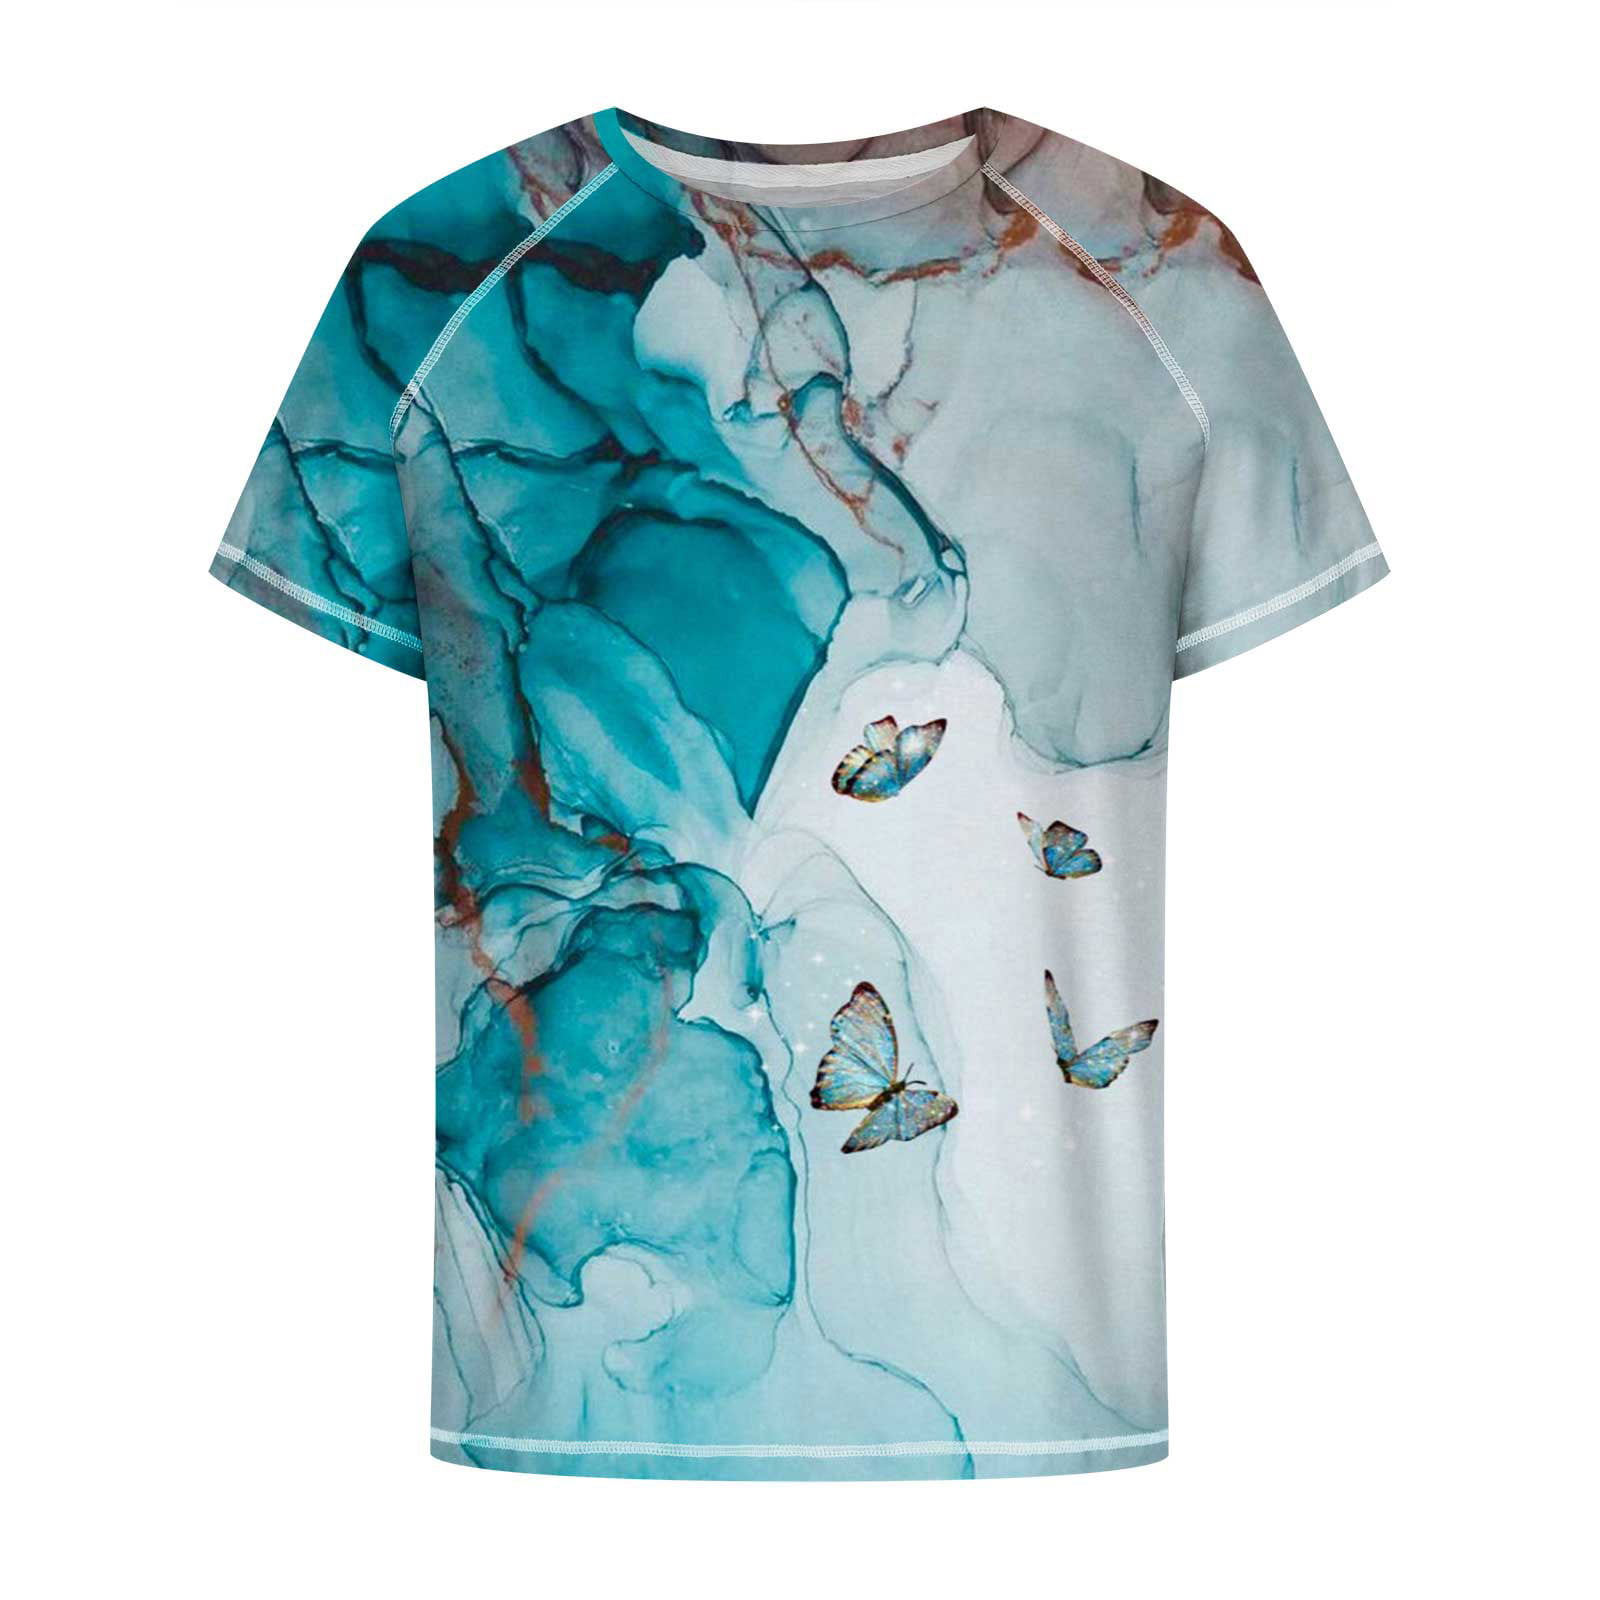 Adult Men's Tees Tops Shirts Flash Picks SMihono Men Casual Round Neck 3D  Digital Printing Pullover Fitness Sports Shorts Sleeves T Shirt Blouse Sky